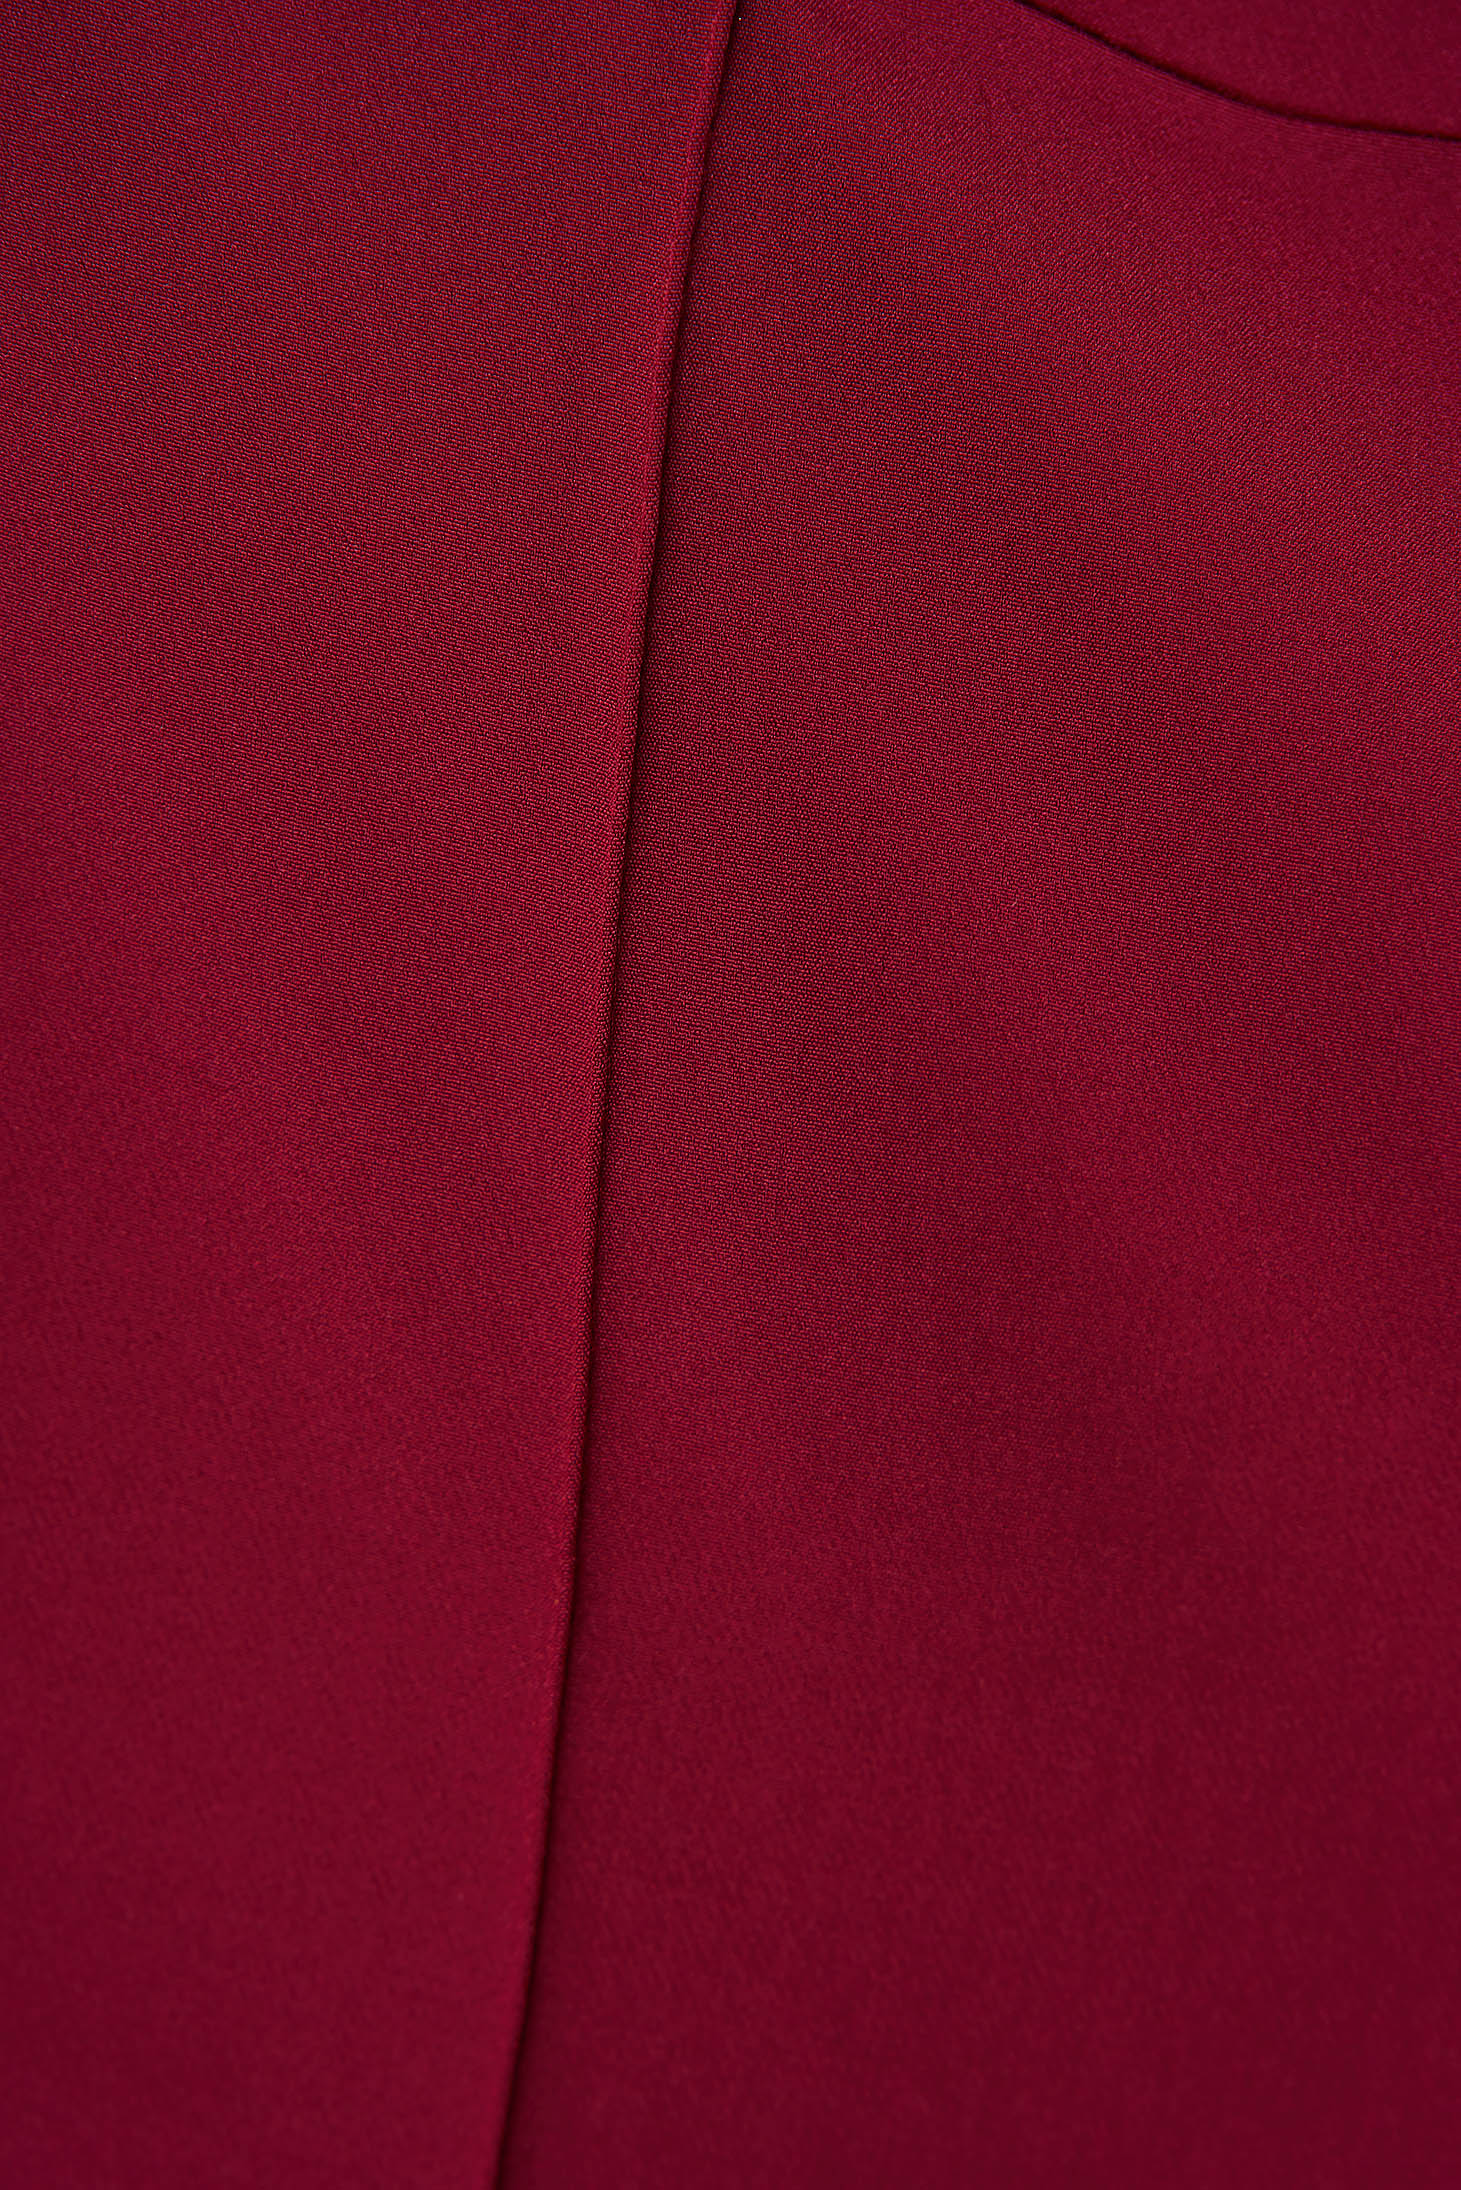 Pantaloni din stofa usor elastica zmeura cu un croi evazat si talie inalta - StarShinerS 4 - StarShinerS.ro